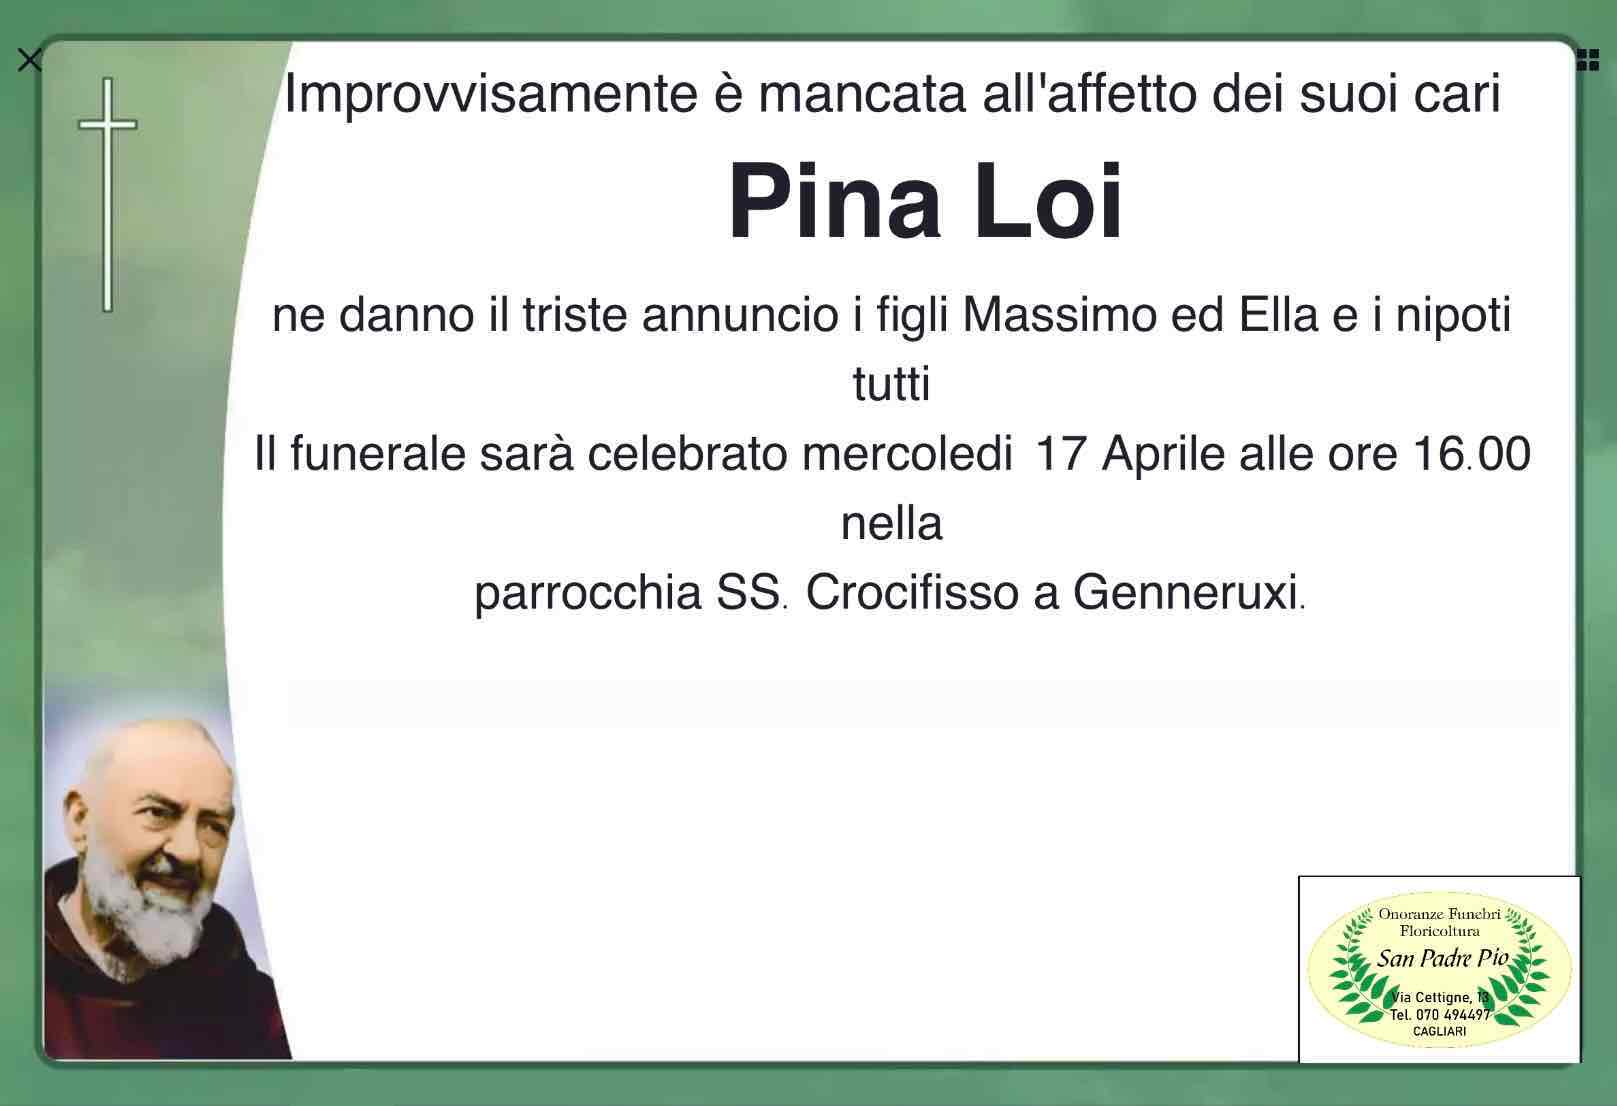 Pina Loi